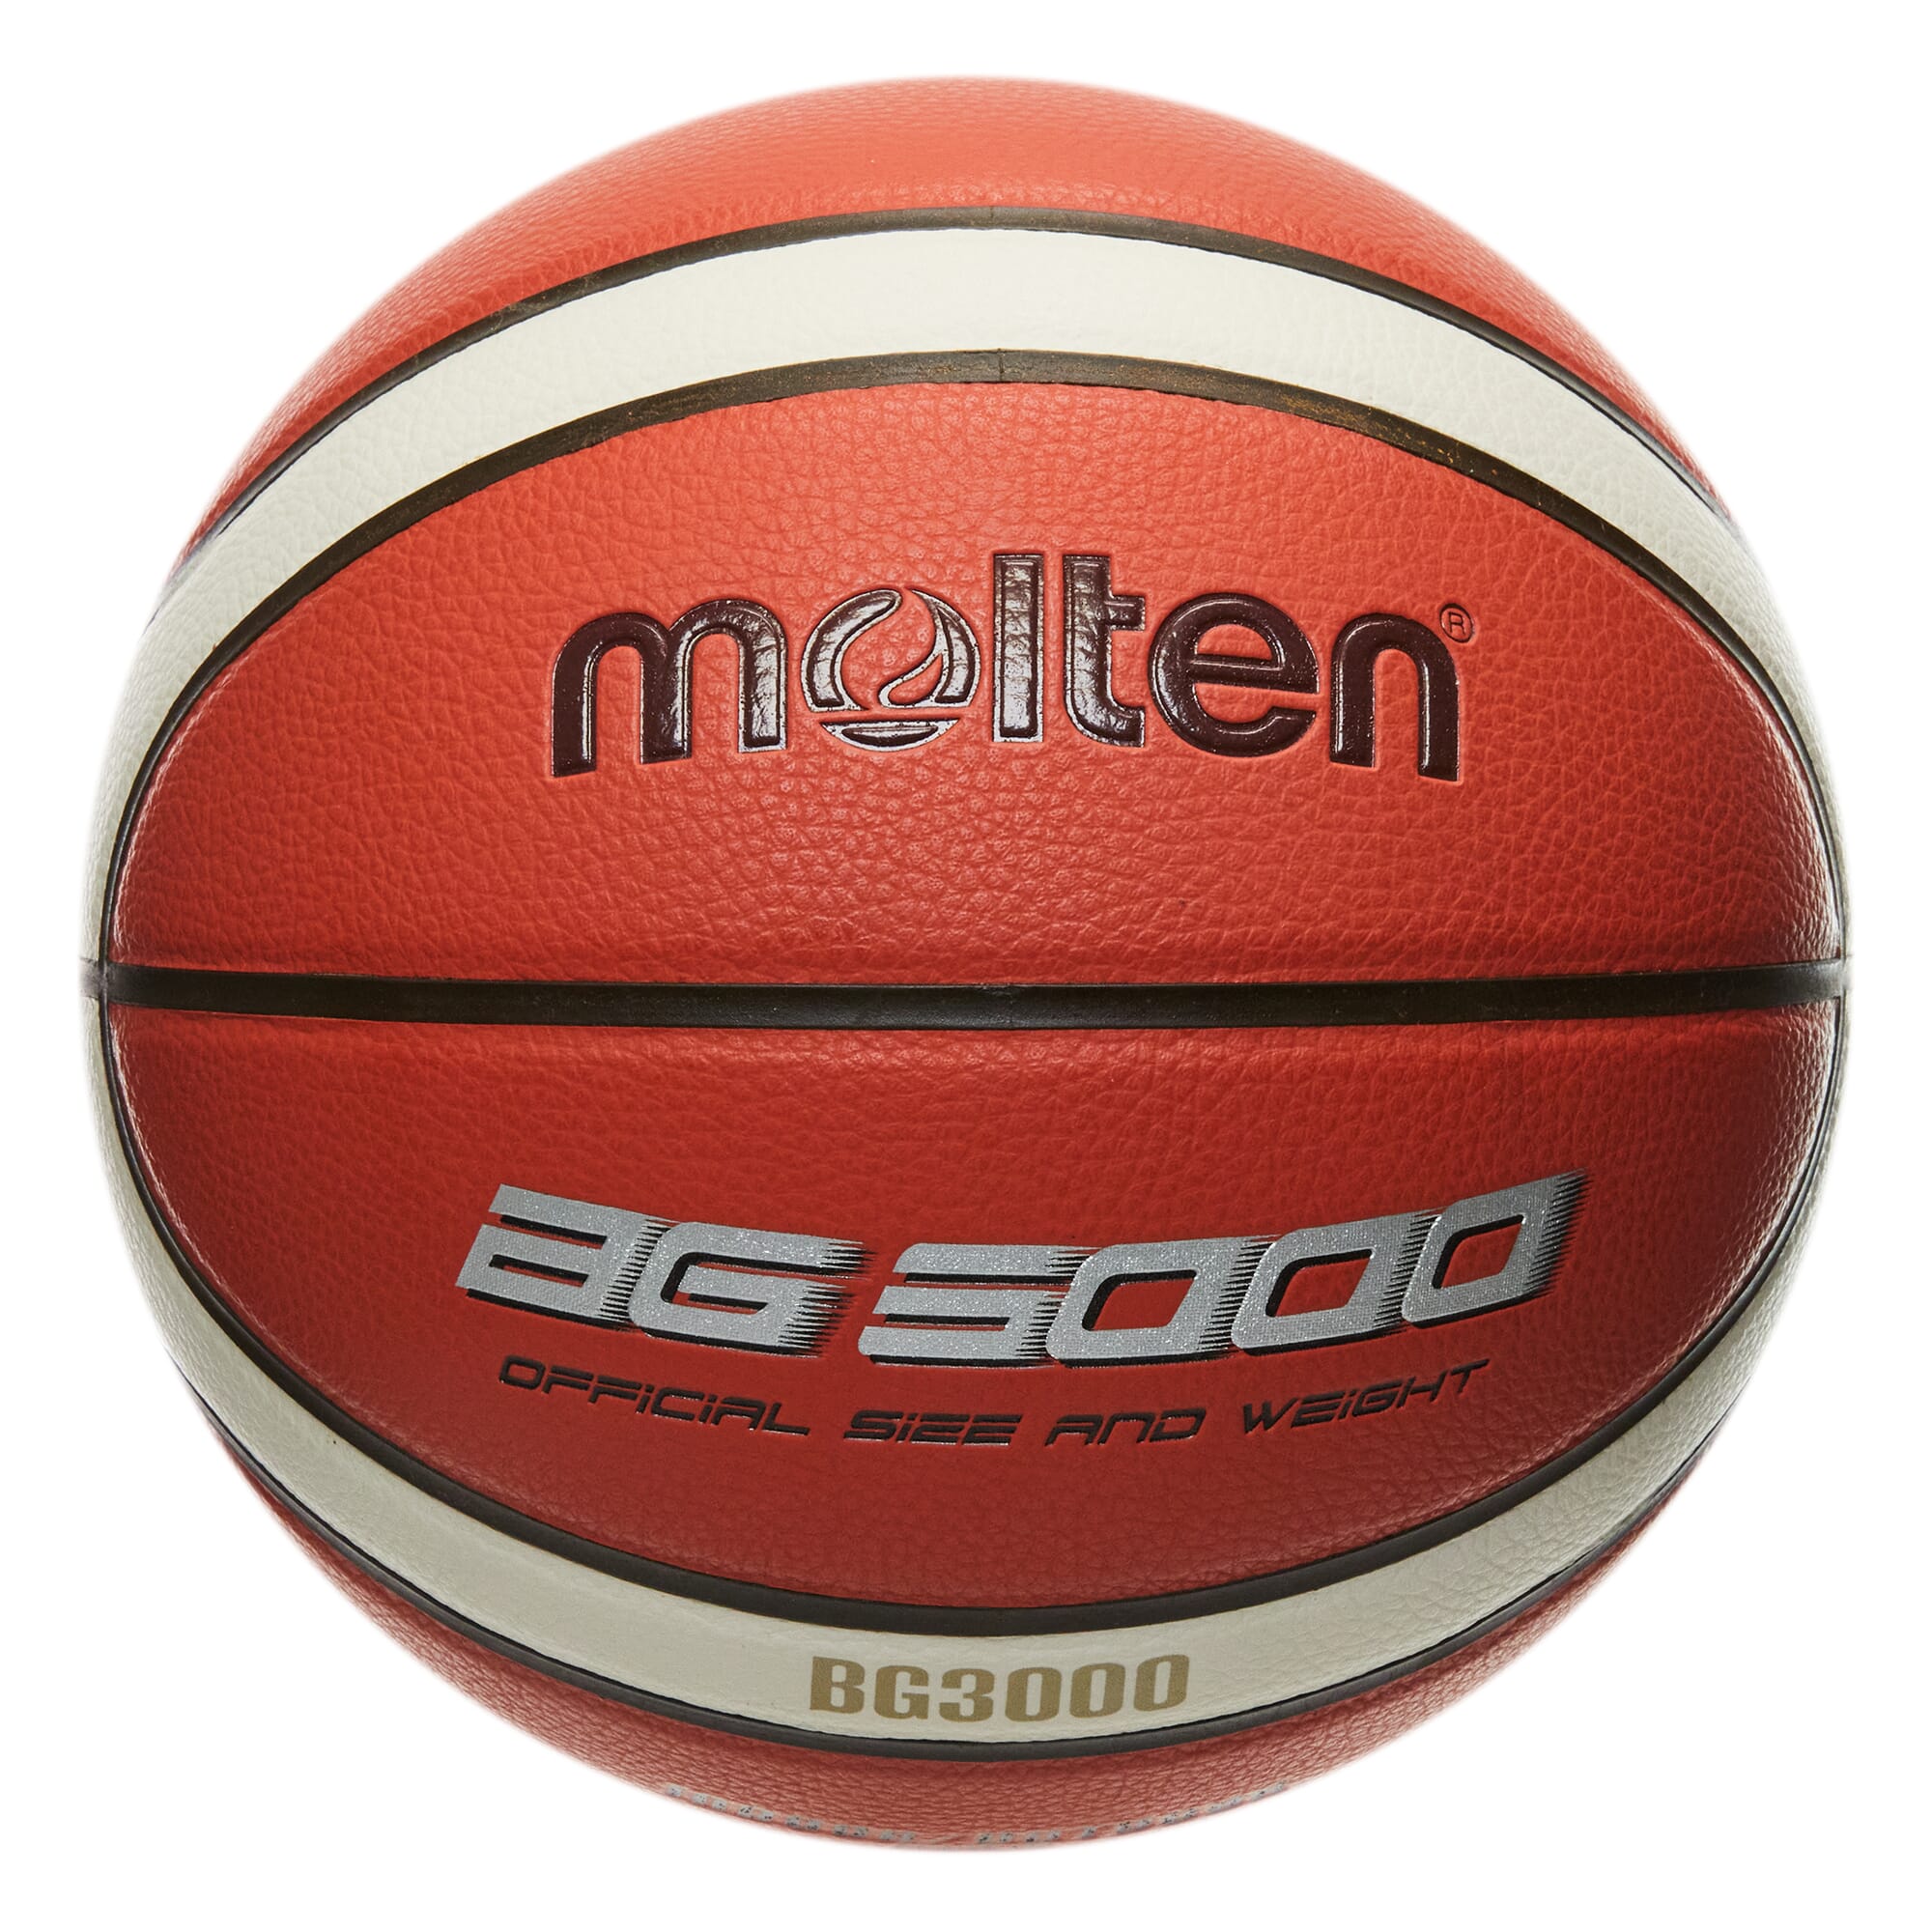 2020 Molten BG3000 Basketball Free P&P 